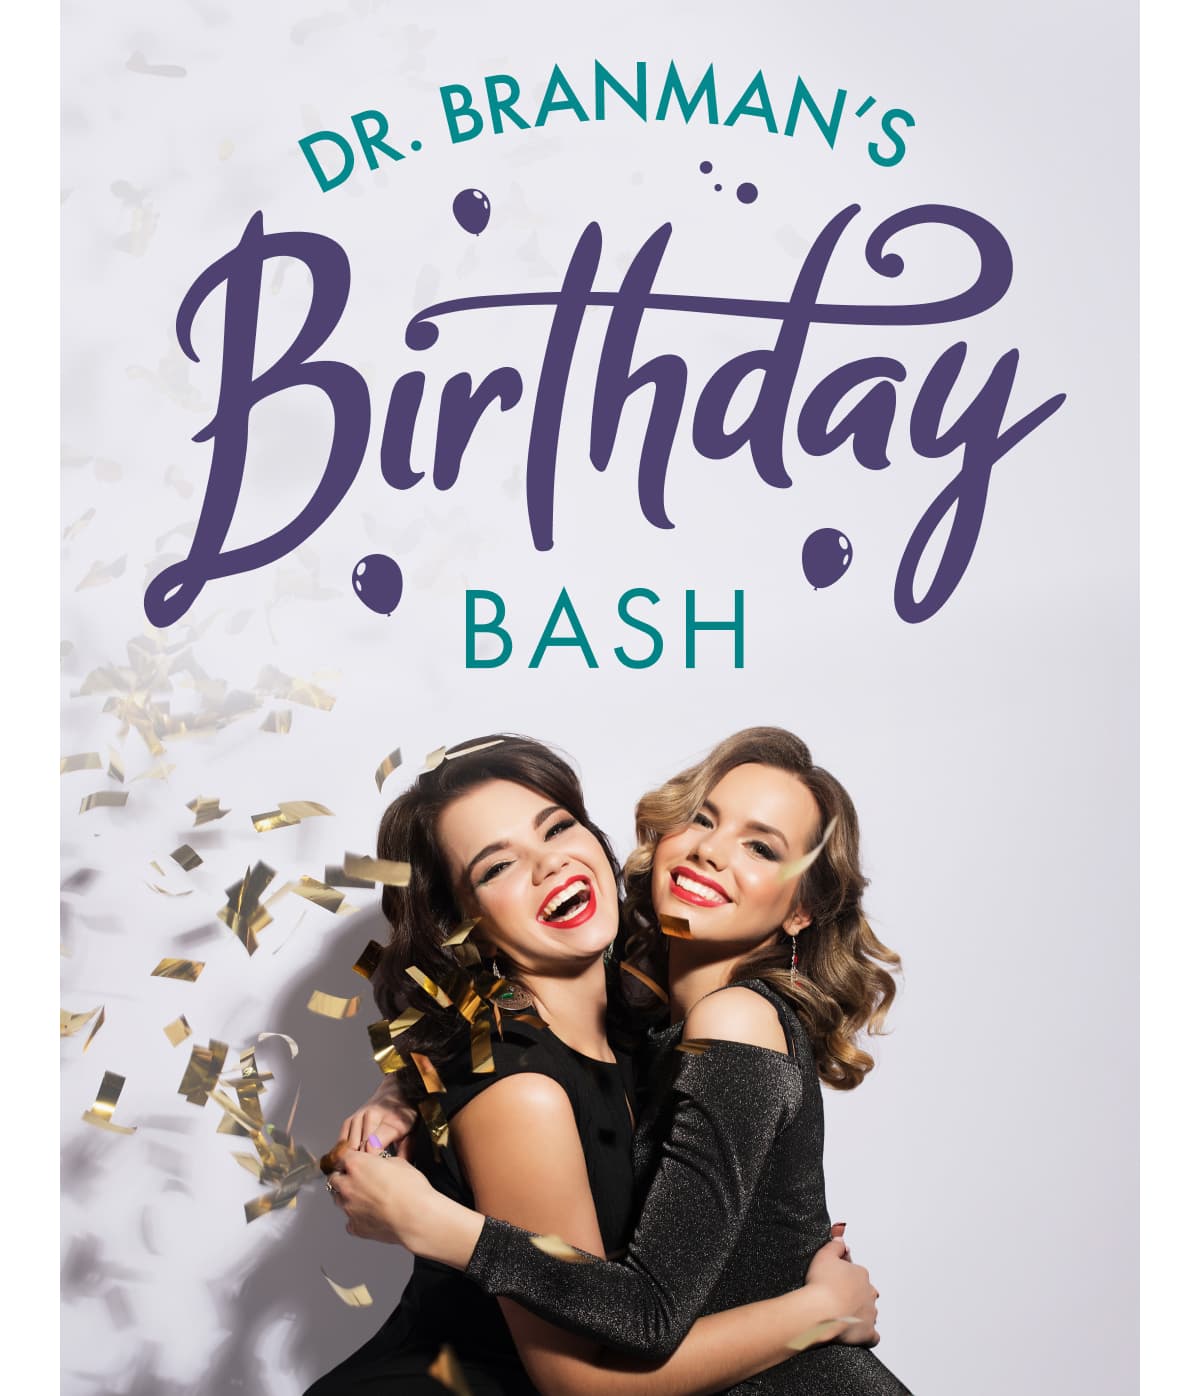 Dr. Branman's Birthday Bash